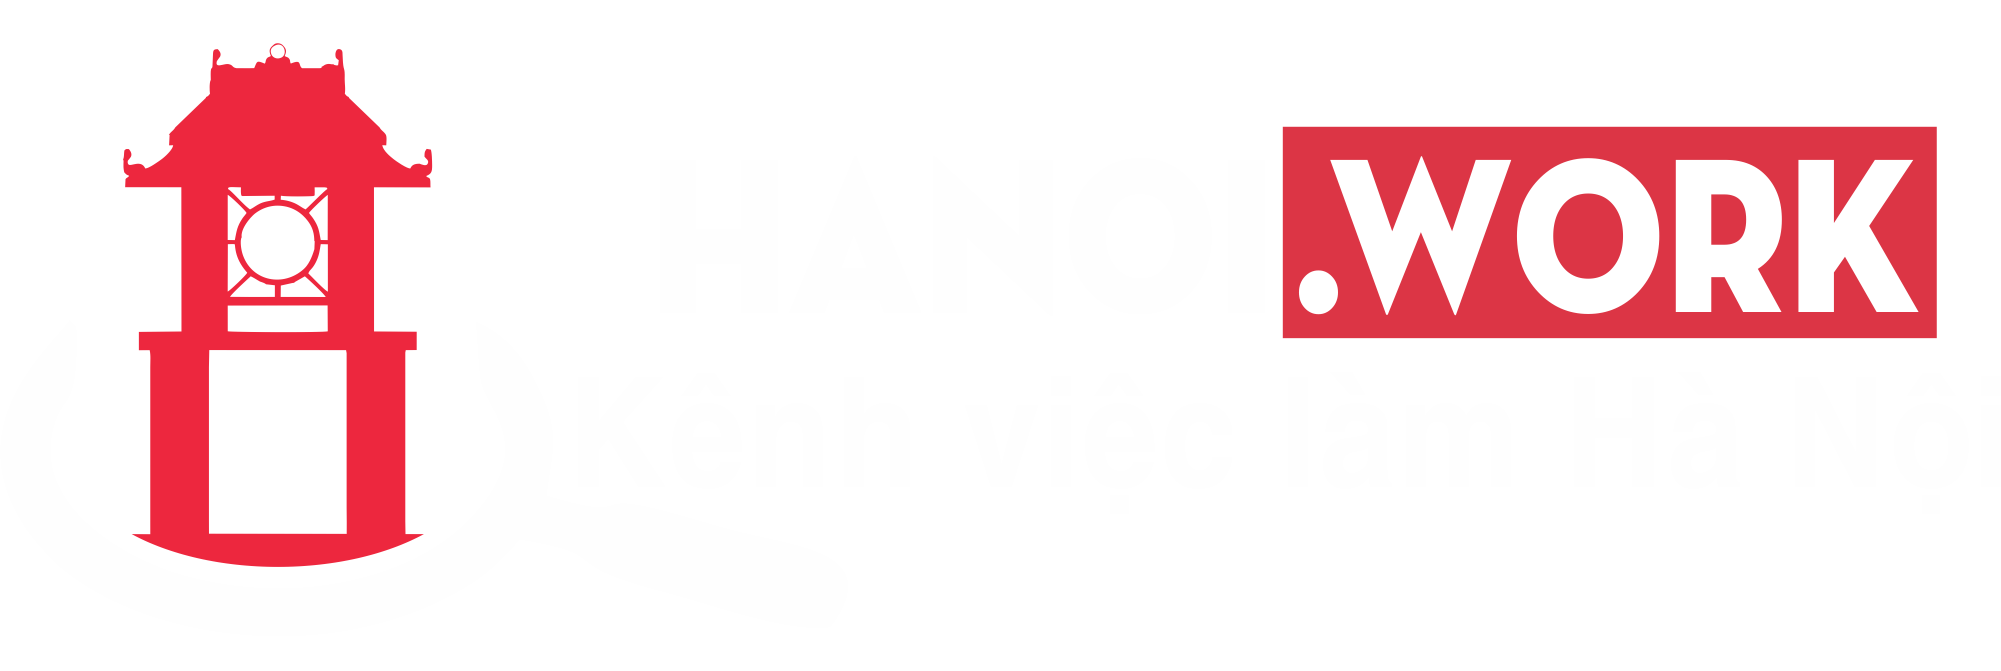 Logo Ha Noi Work Am Ban